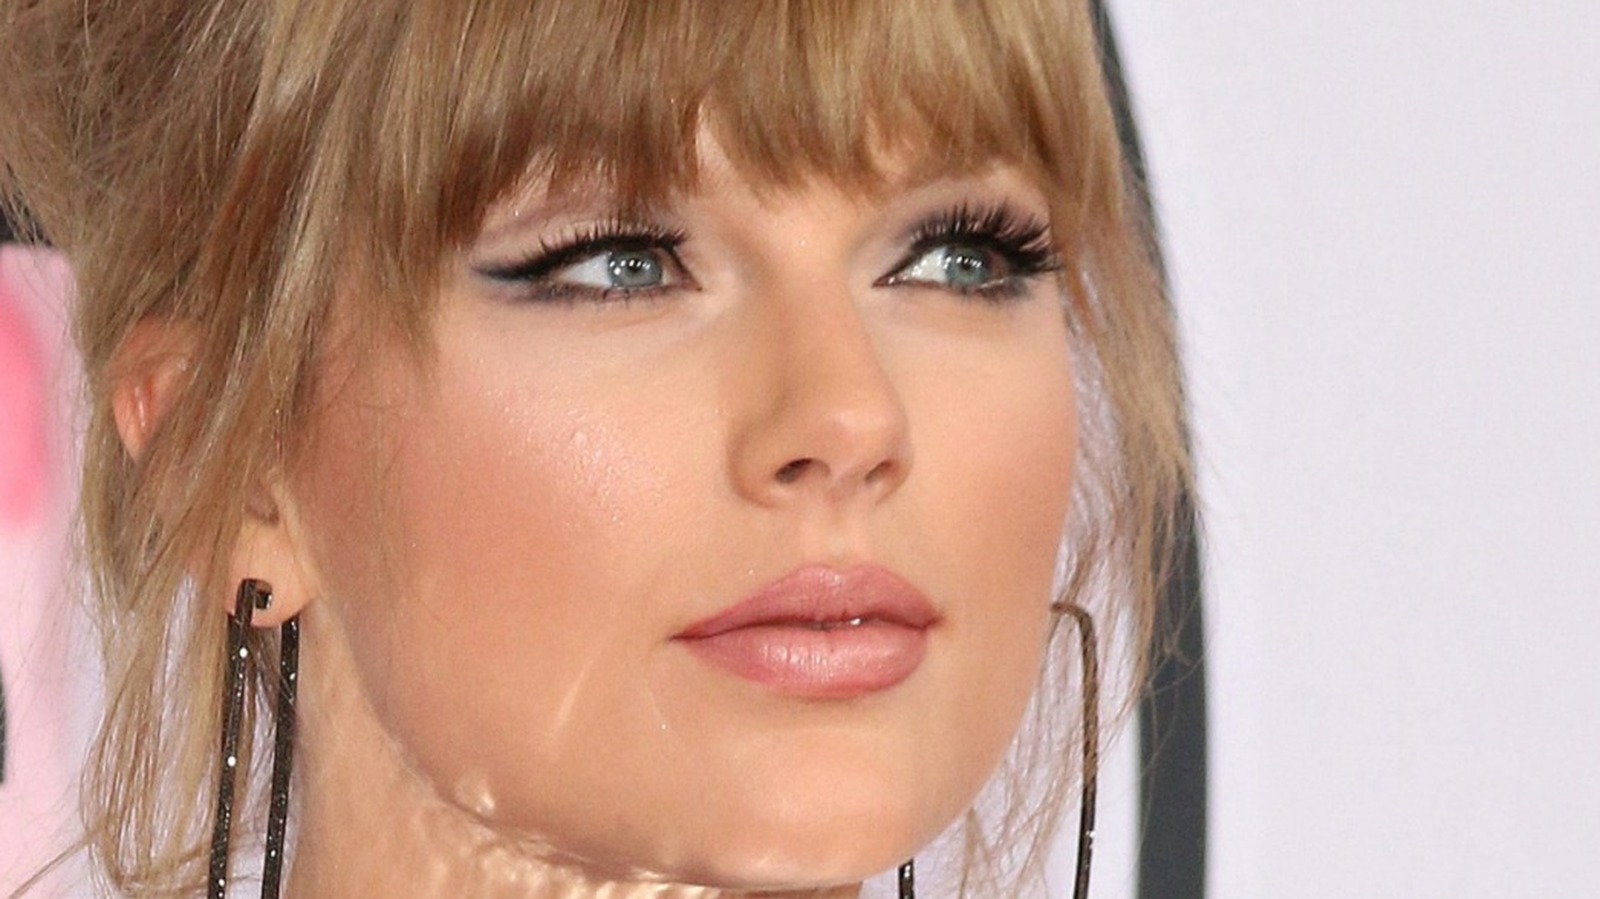 Taylor Swift's Hair Transformation